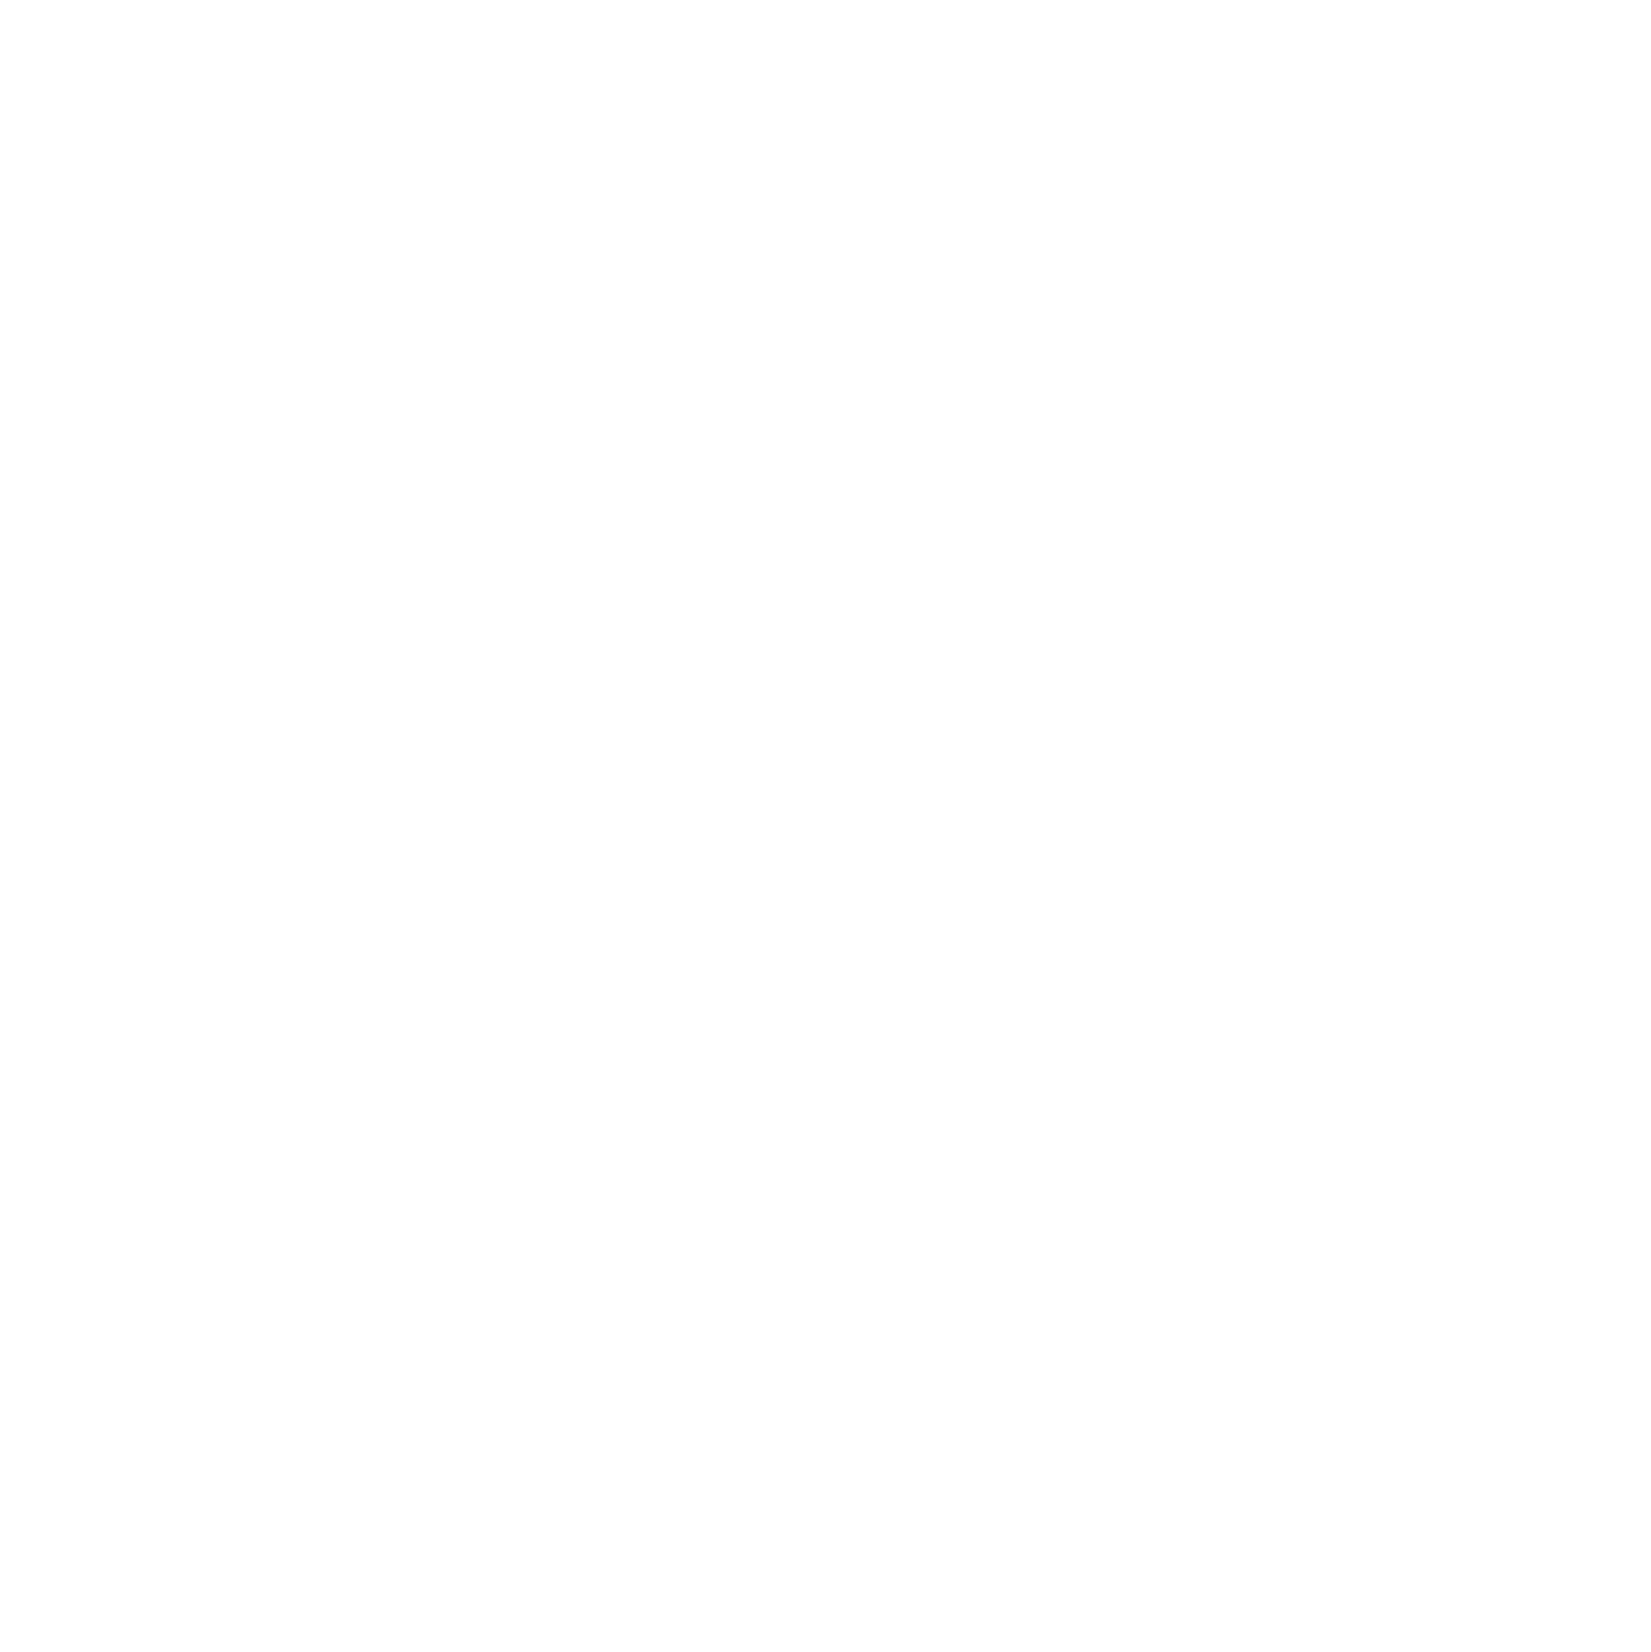 Globe_logo